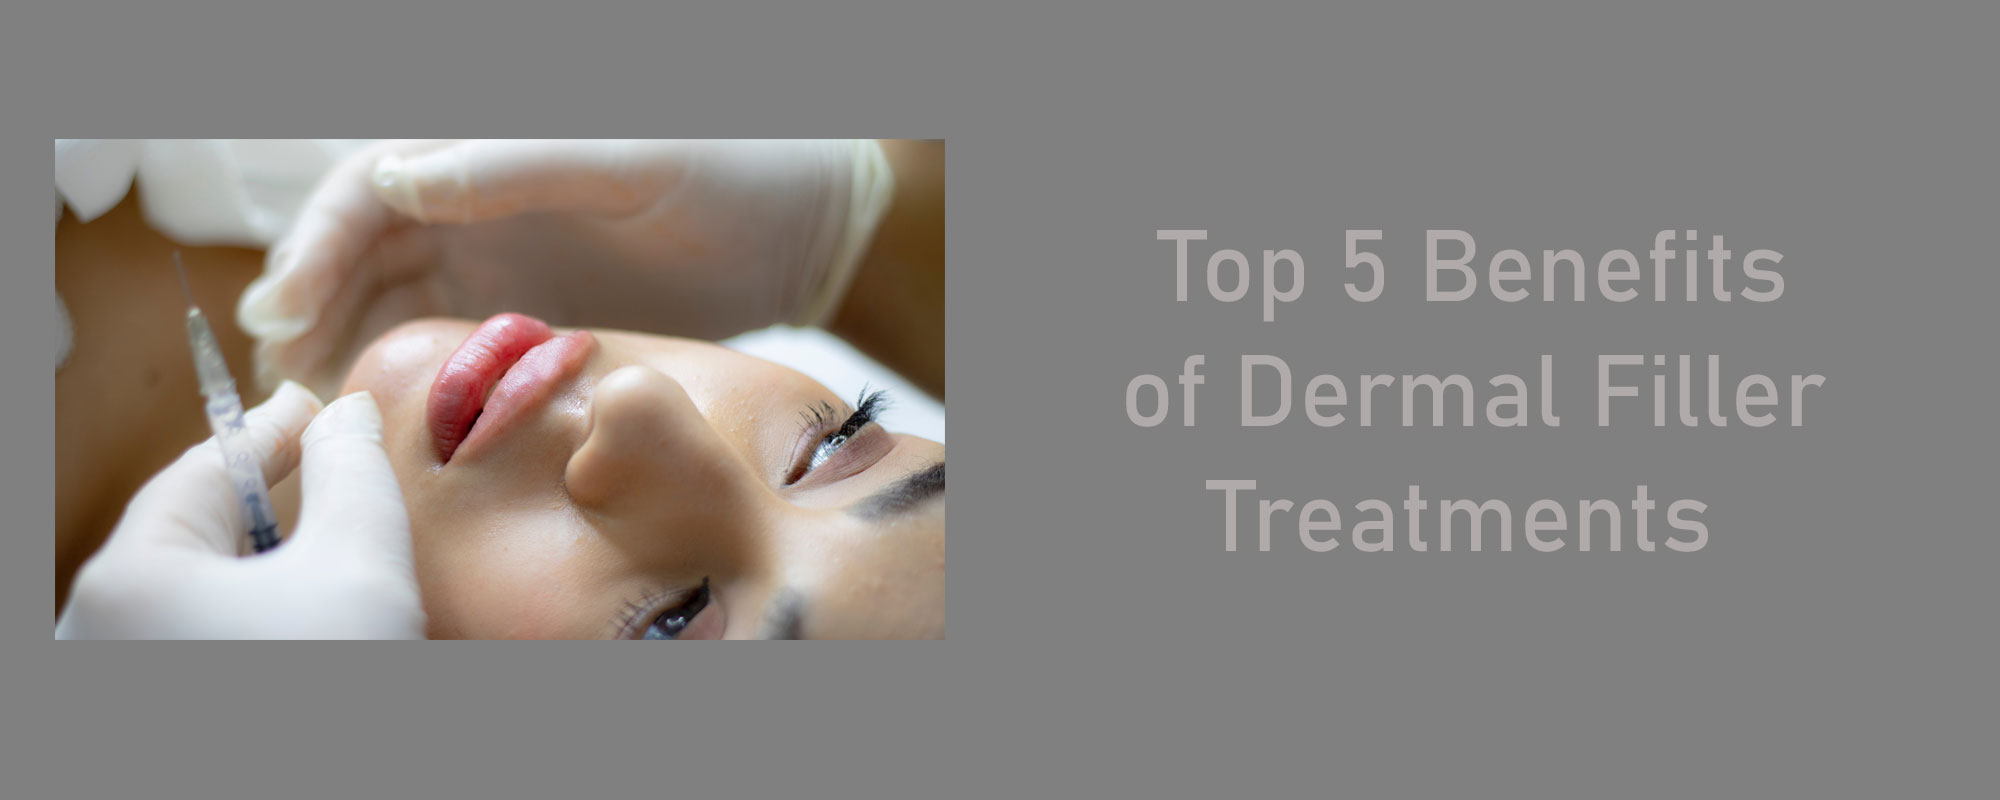 Top 5 Benefits of Dermal Filler Treatments - 1